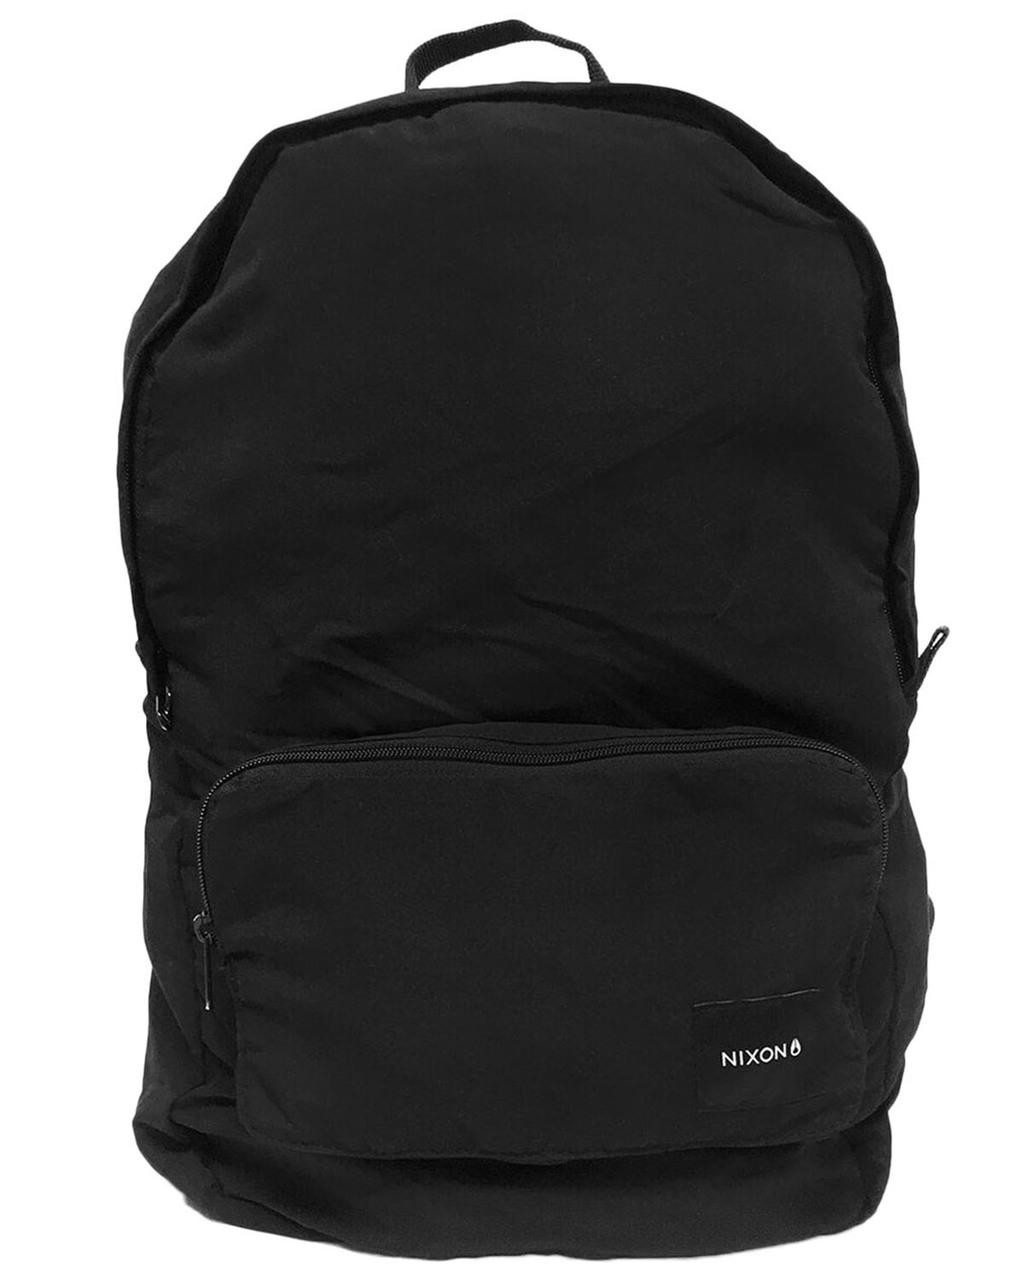 Buy Nixon Traps Backpack All Black Backpack at Ubuy India